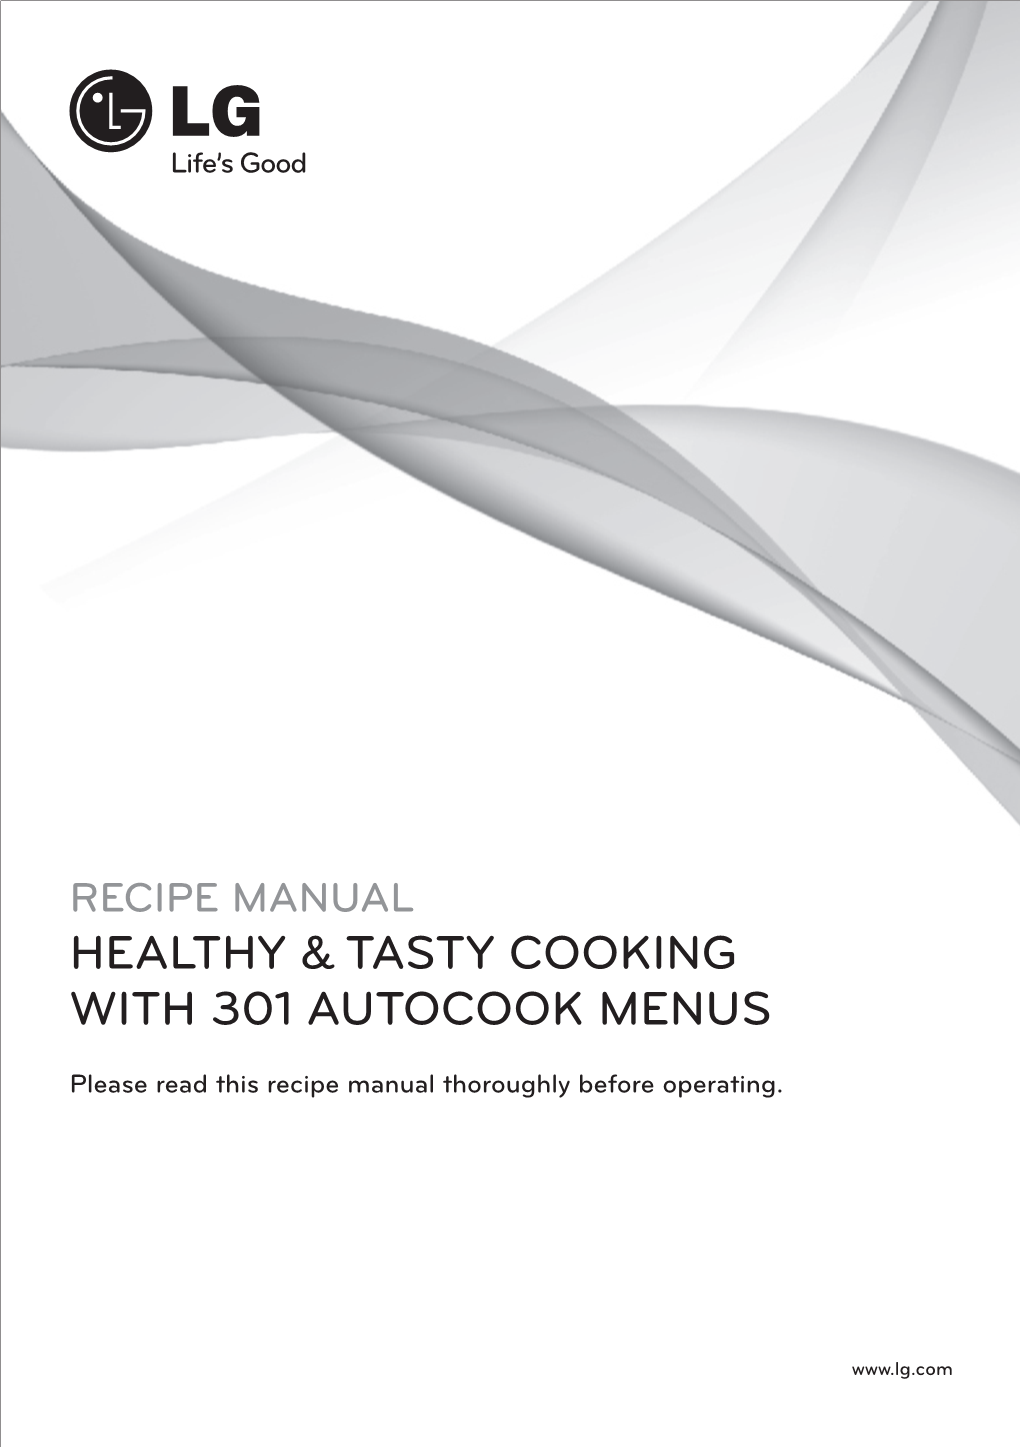 Healthy & Tasty Cooking with 301 Autocook Menus